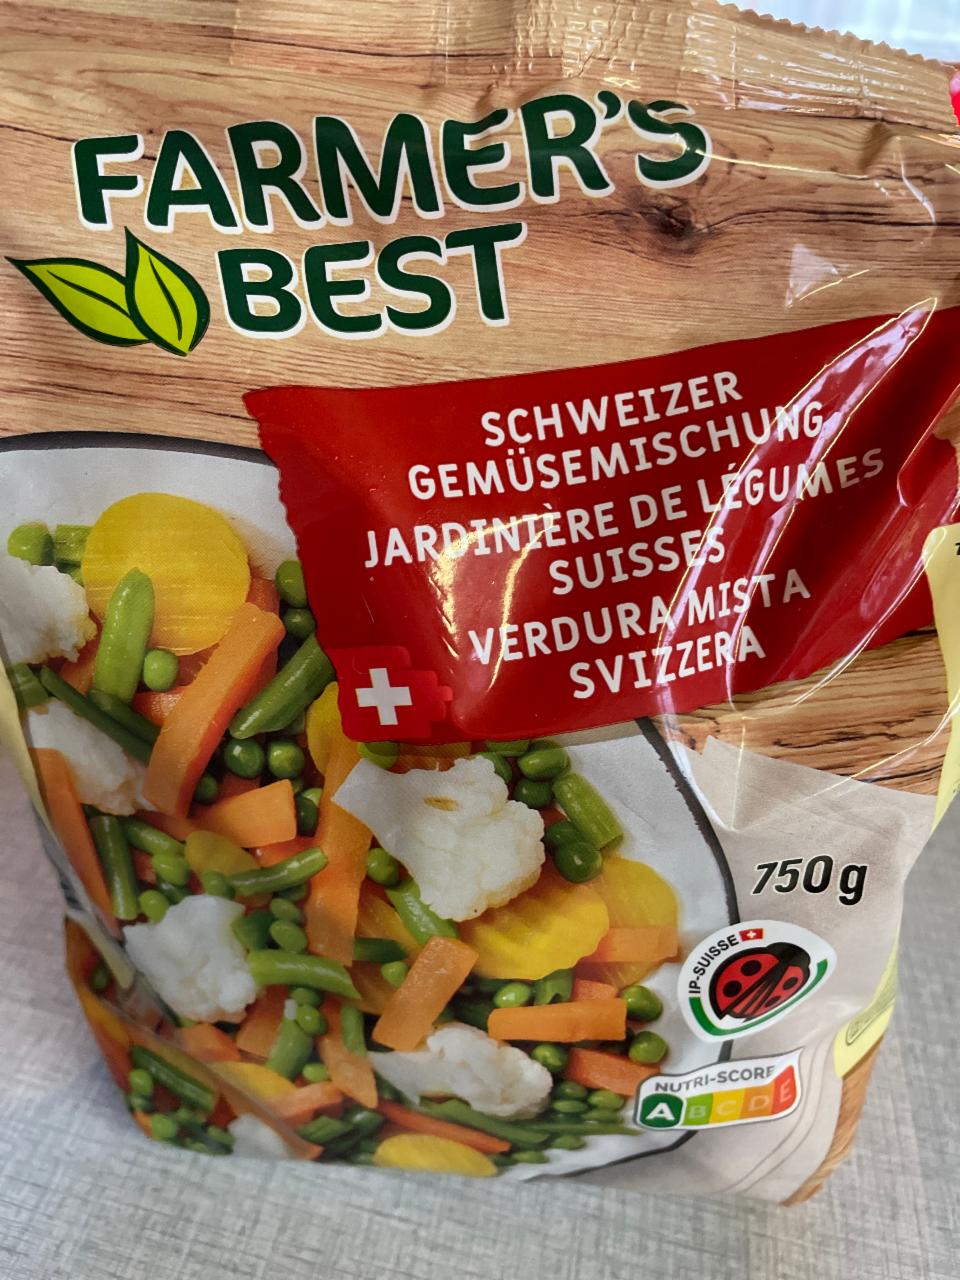 Fotografie - Schweizer Gemüsemischung Farmer's Best